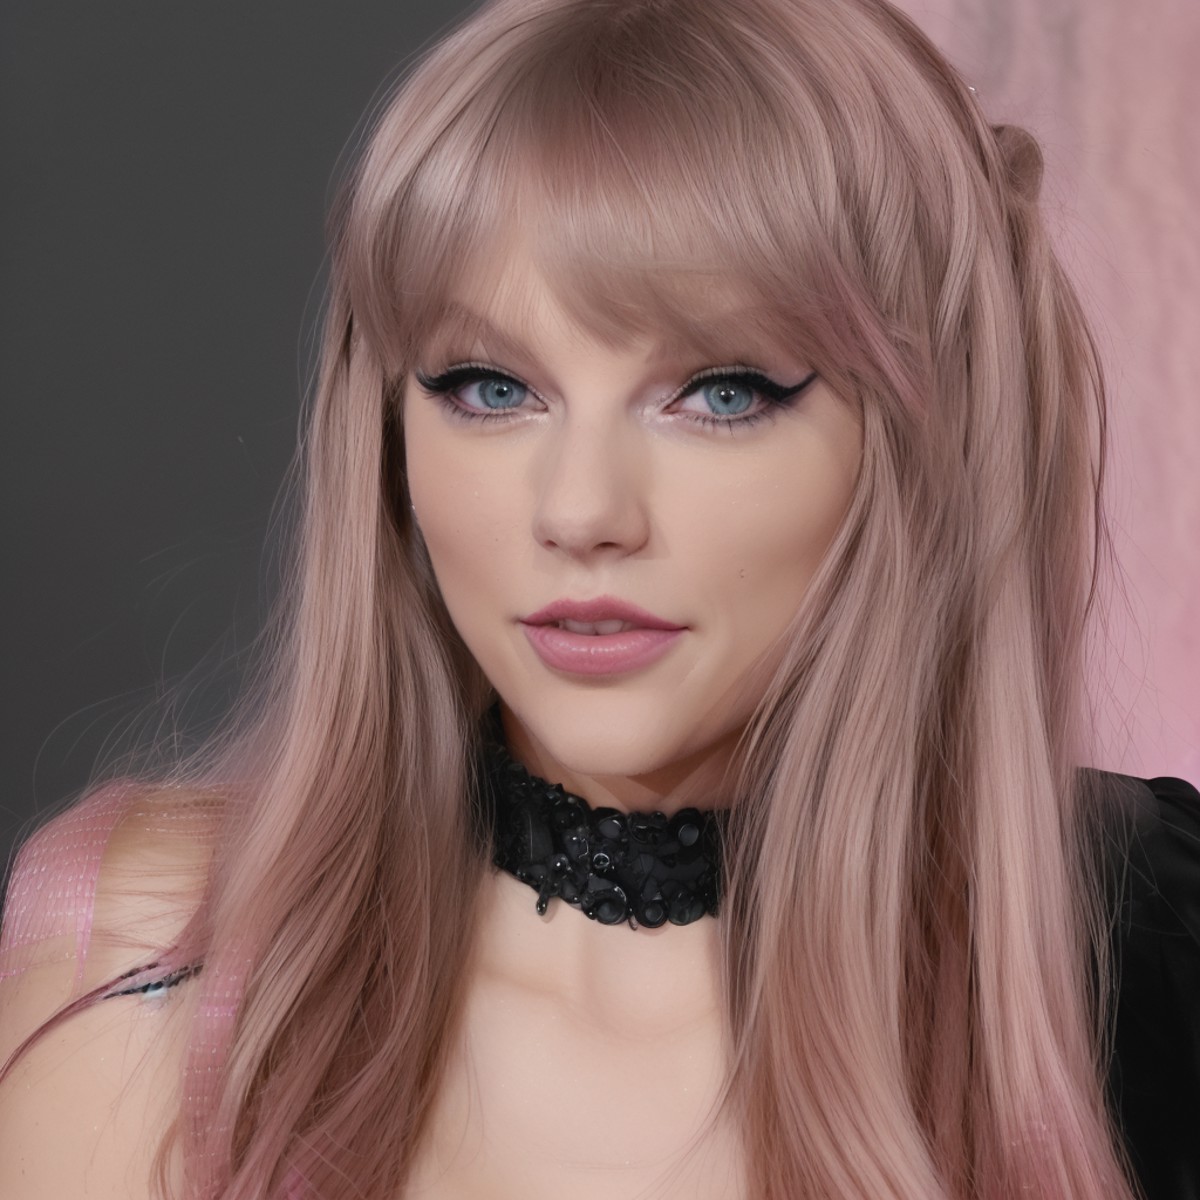 <lora:Taysway_V5-10:1> Taysway, woman, upper body, black background, studio lighting, long pink hair, mascara, looking at ...